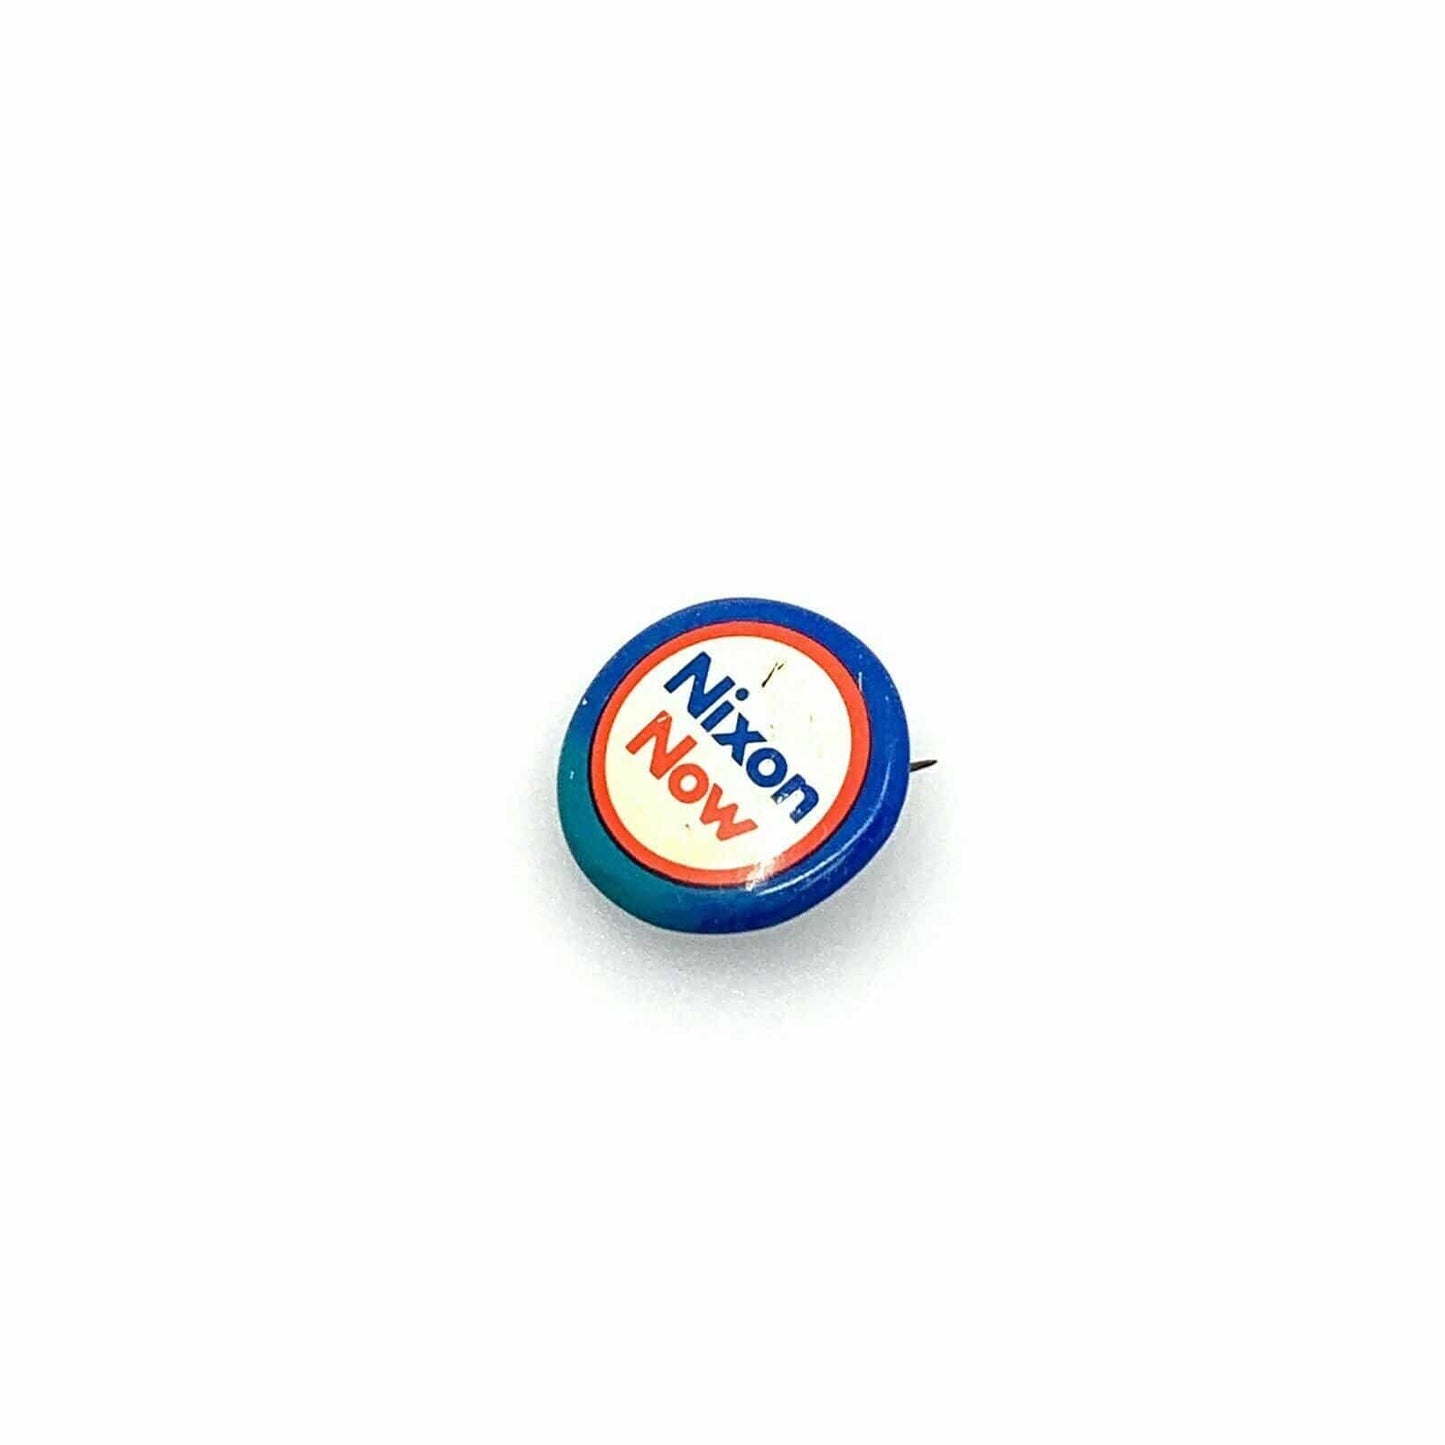 Vintage "Nixon Now" Presidential campaign button • 1972 campaign